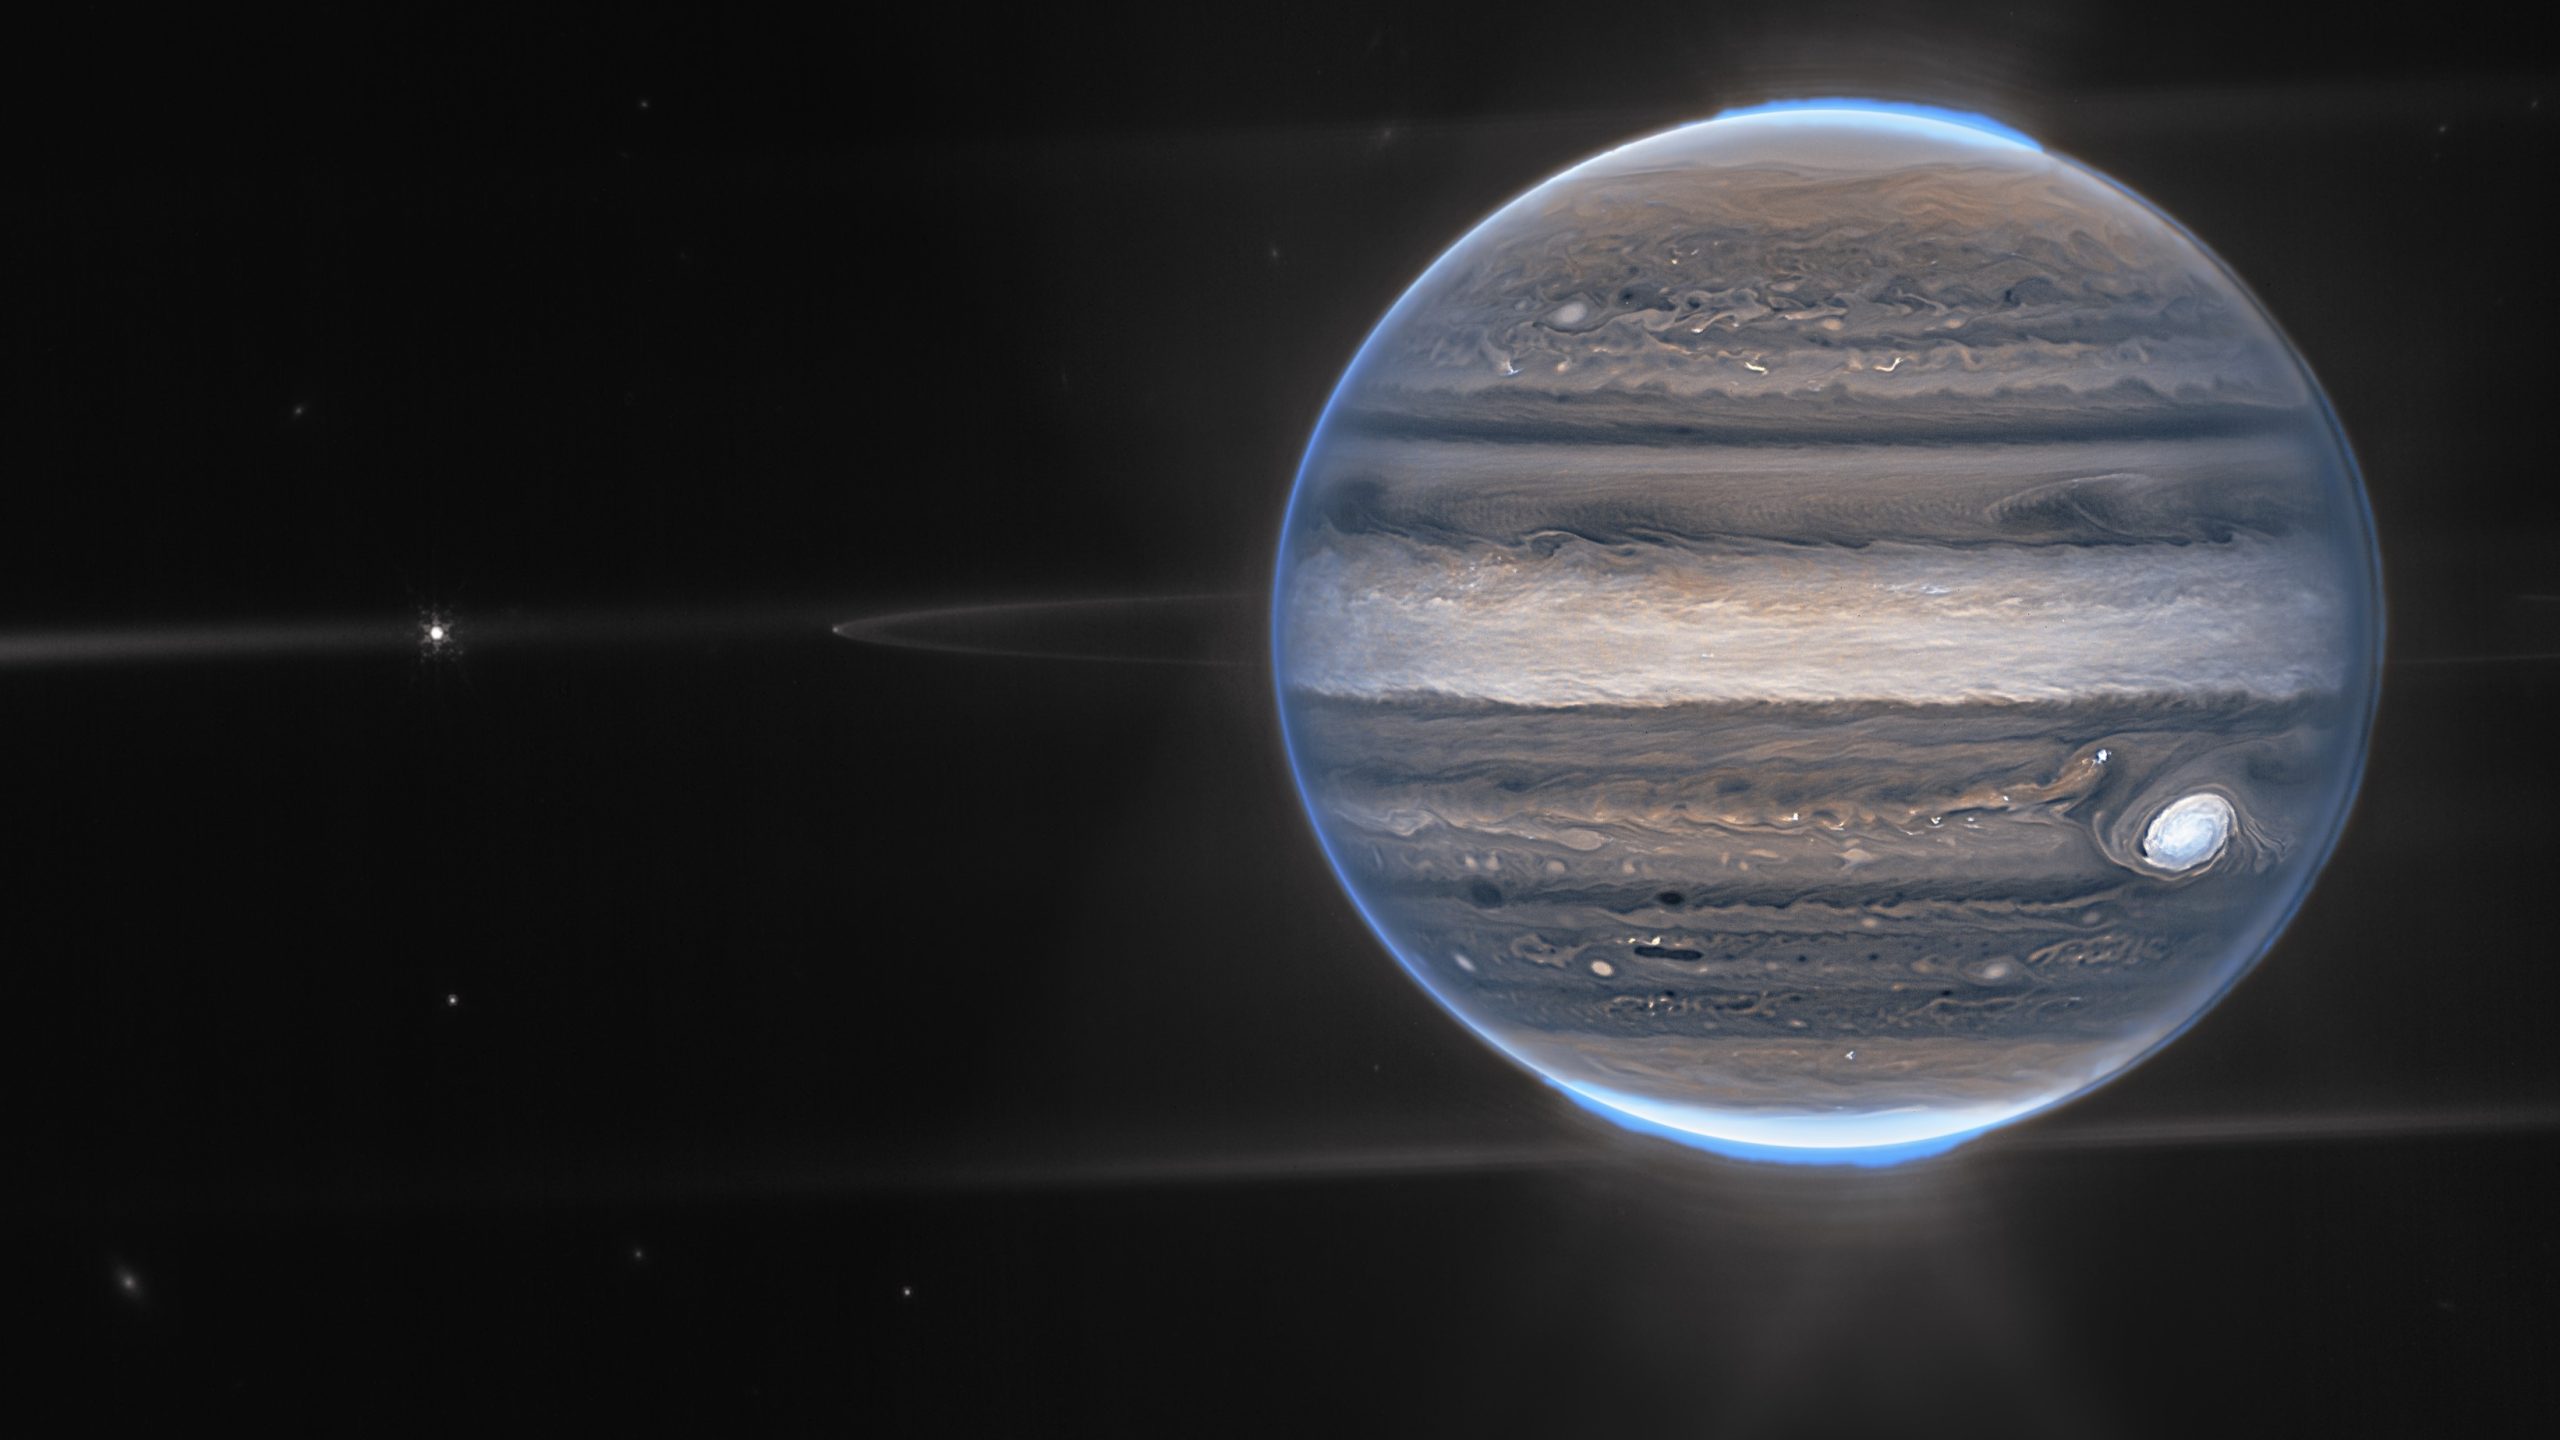 Jupiter glows in beautiful new James Webb telescope photos